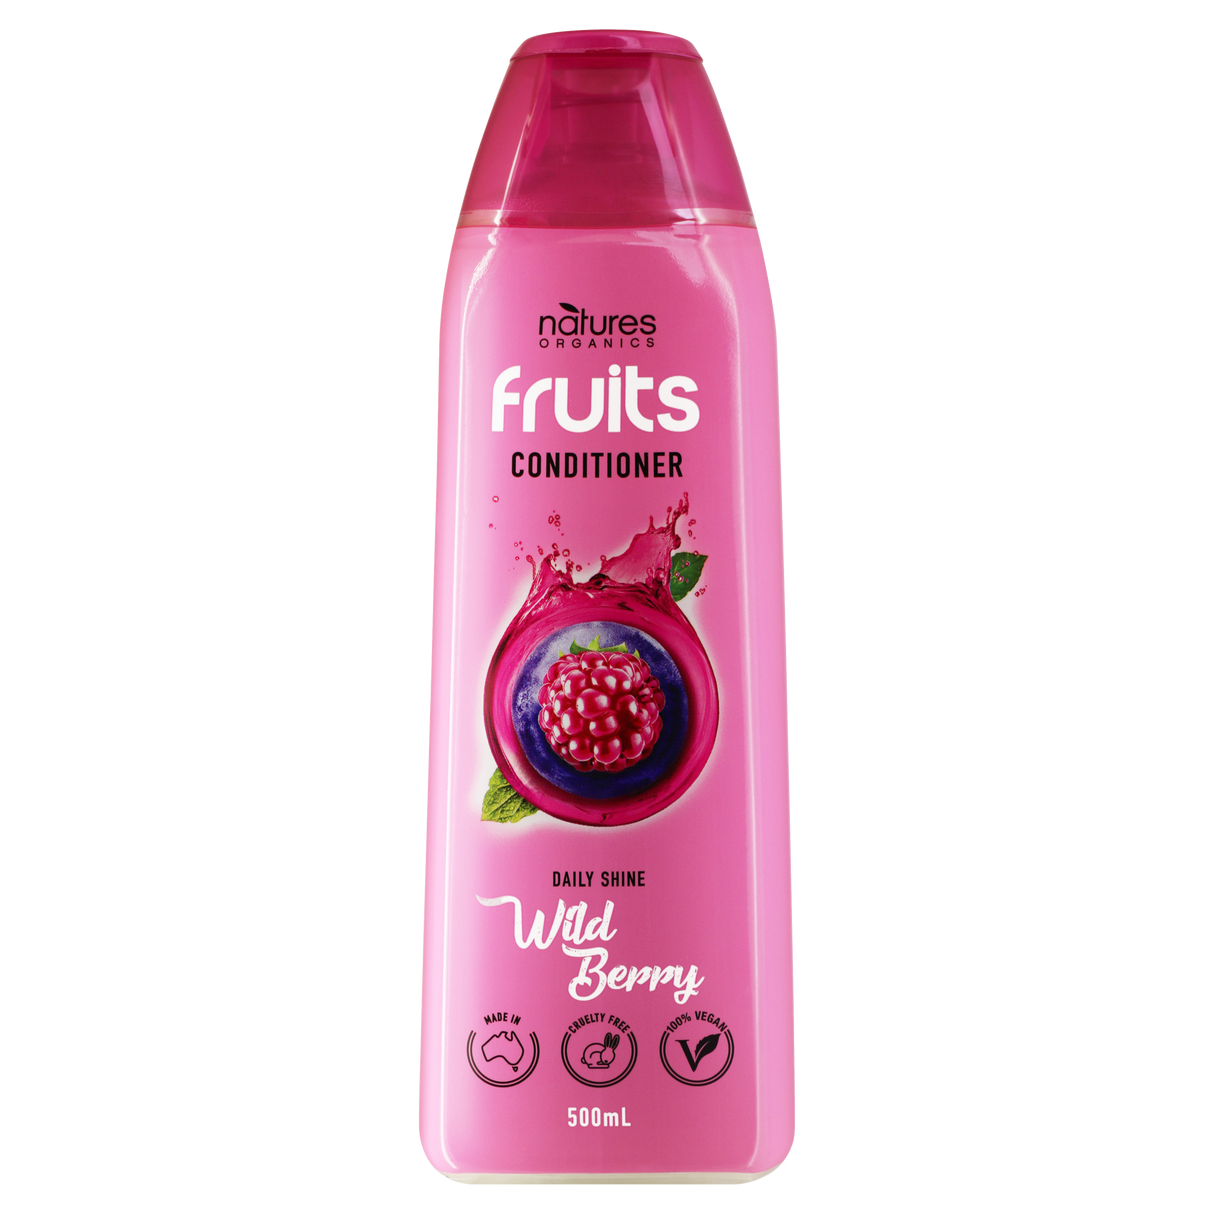 Natures Organics Fruits Conditioner Wild Berry 500ml